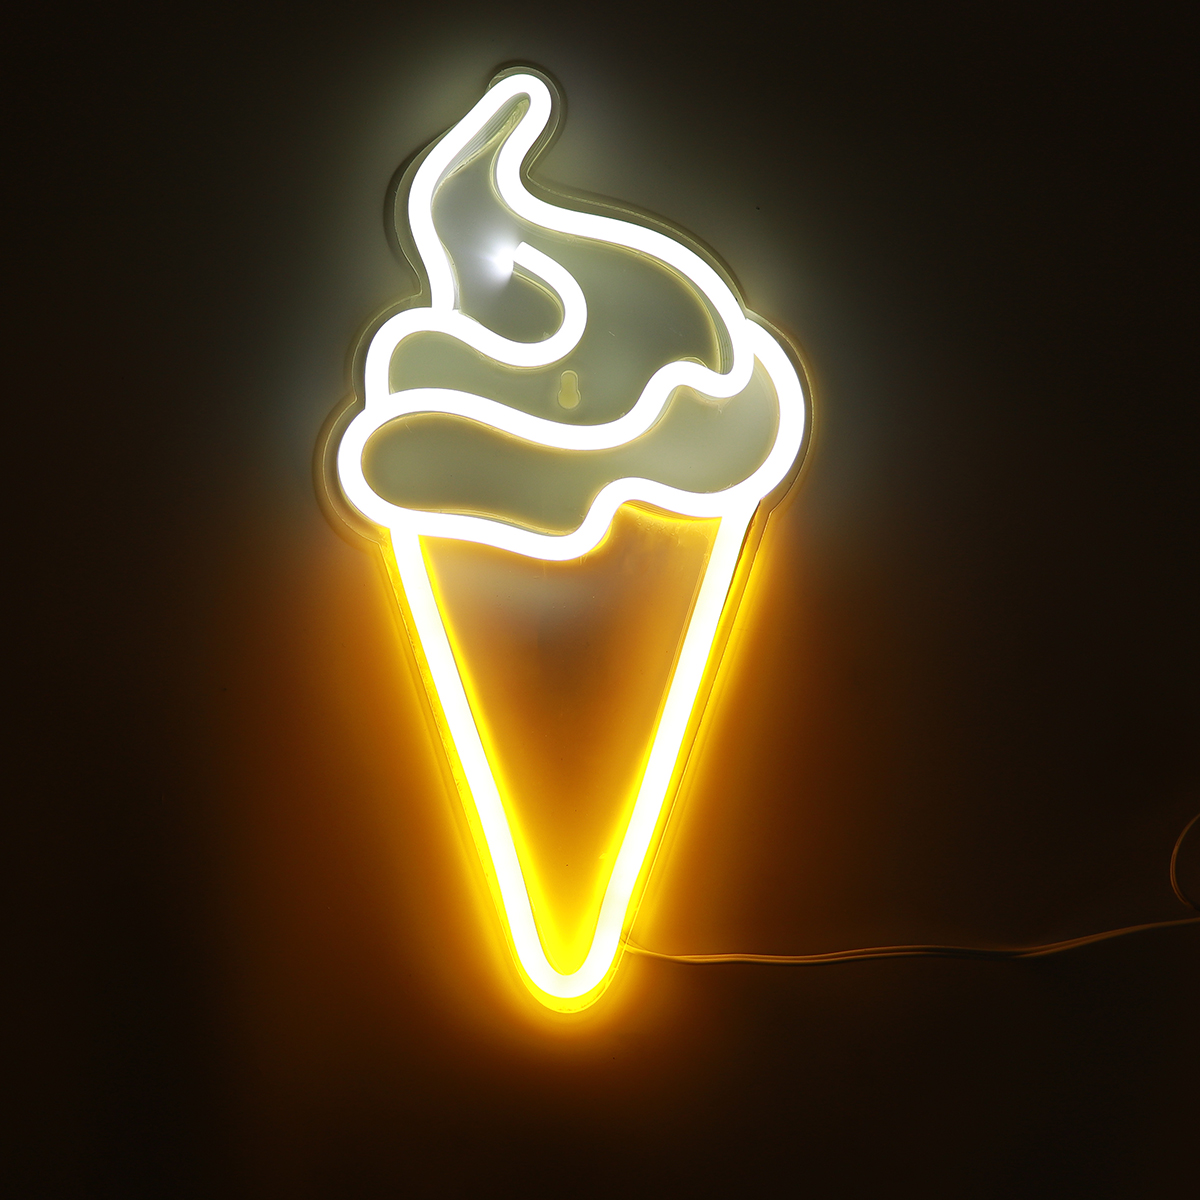 Ice-cream-LED-Neon-Sign-Light-Visual-Artwork-Night-Light-Wall-Lamps-Bedroom-Home-1791486-1